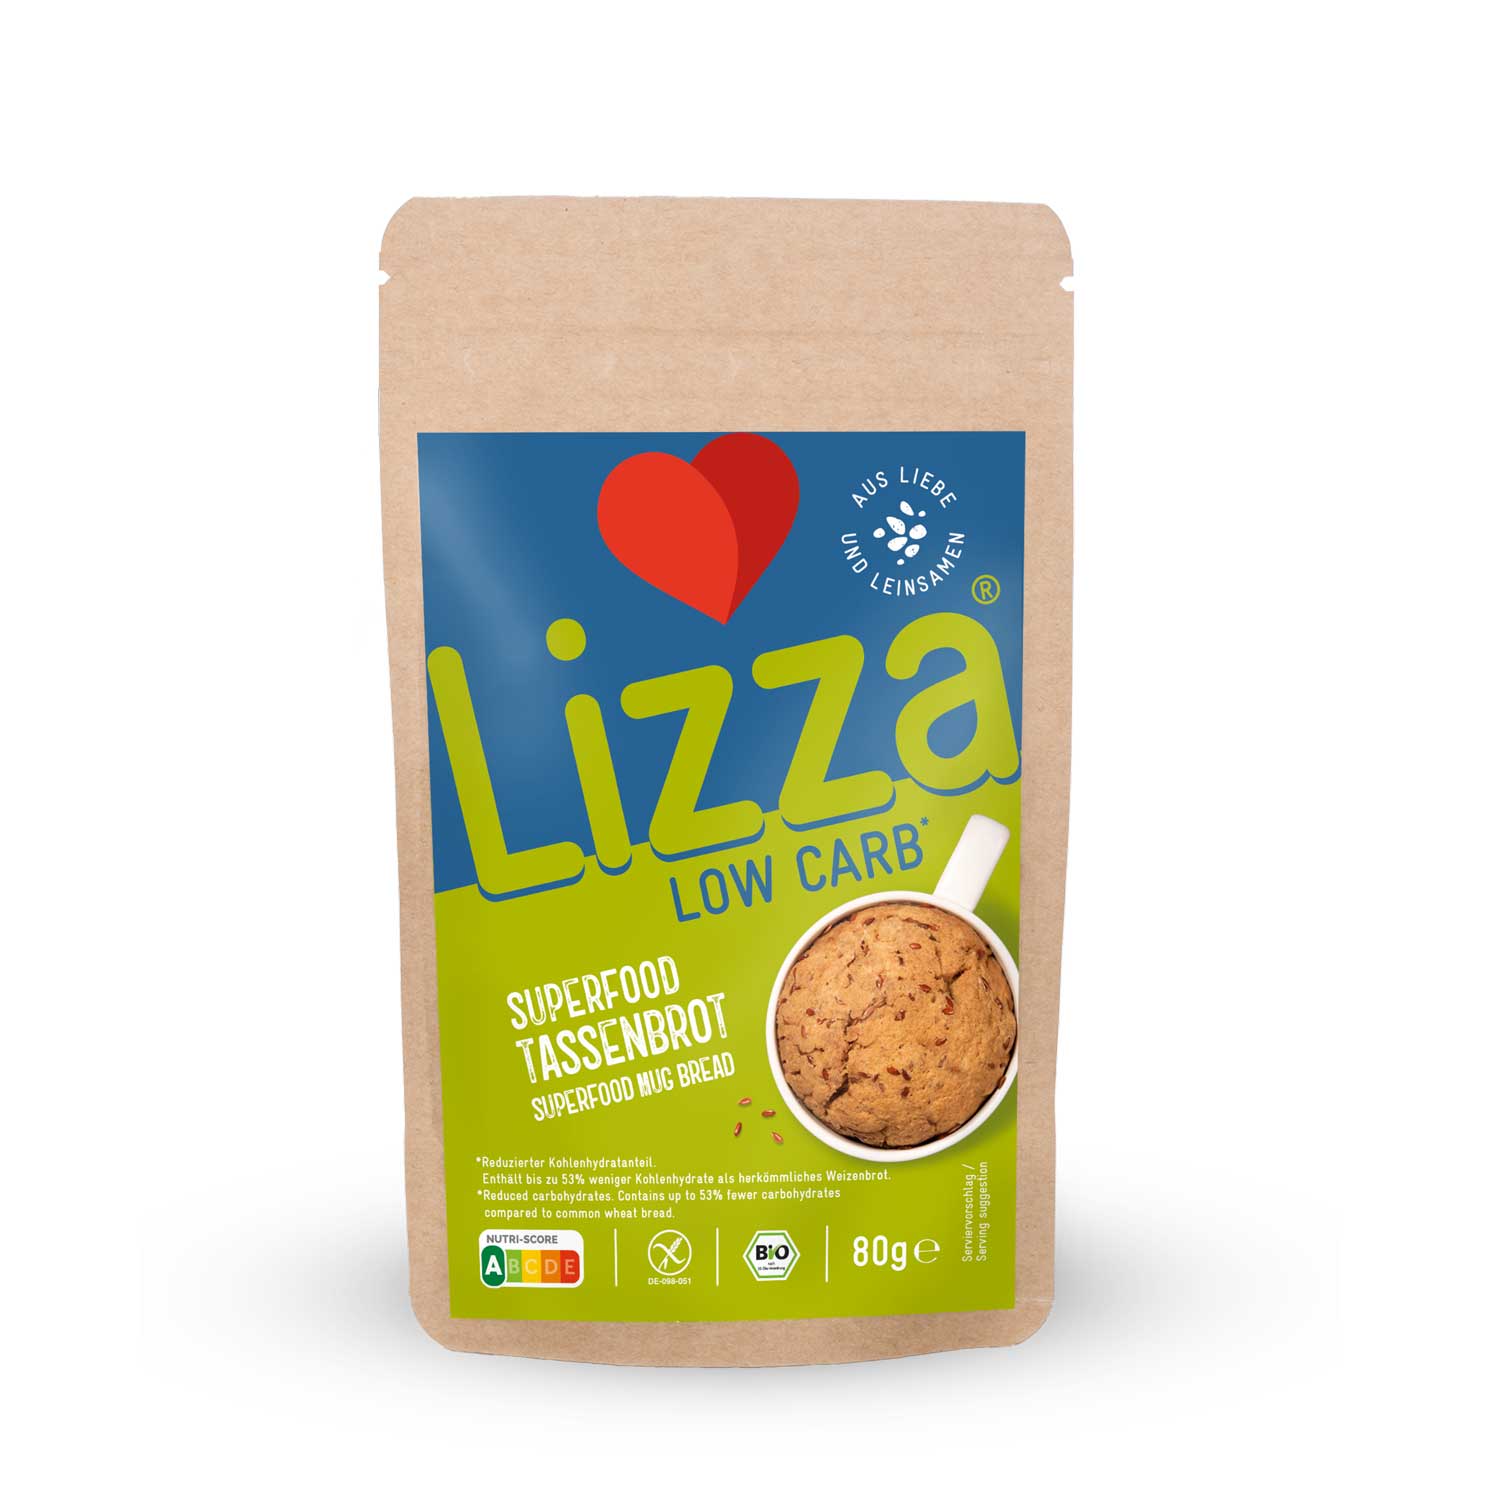 LIZZA (EU) Superfood Mug Bread »